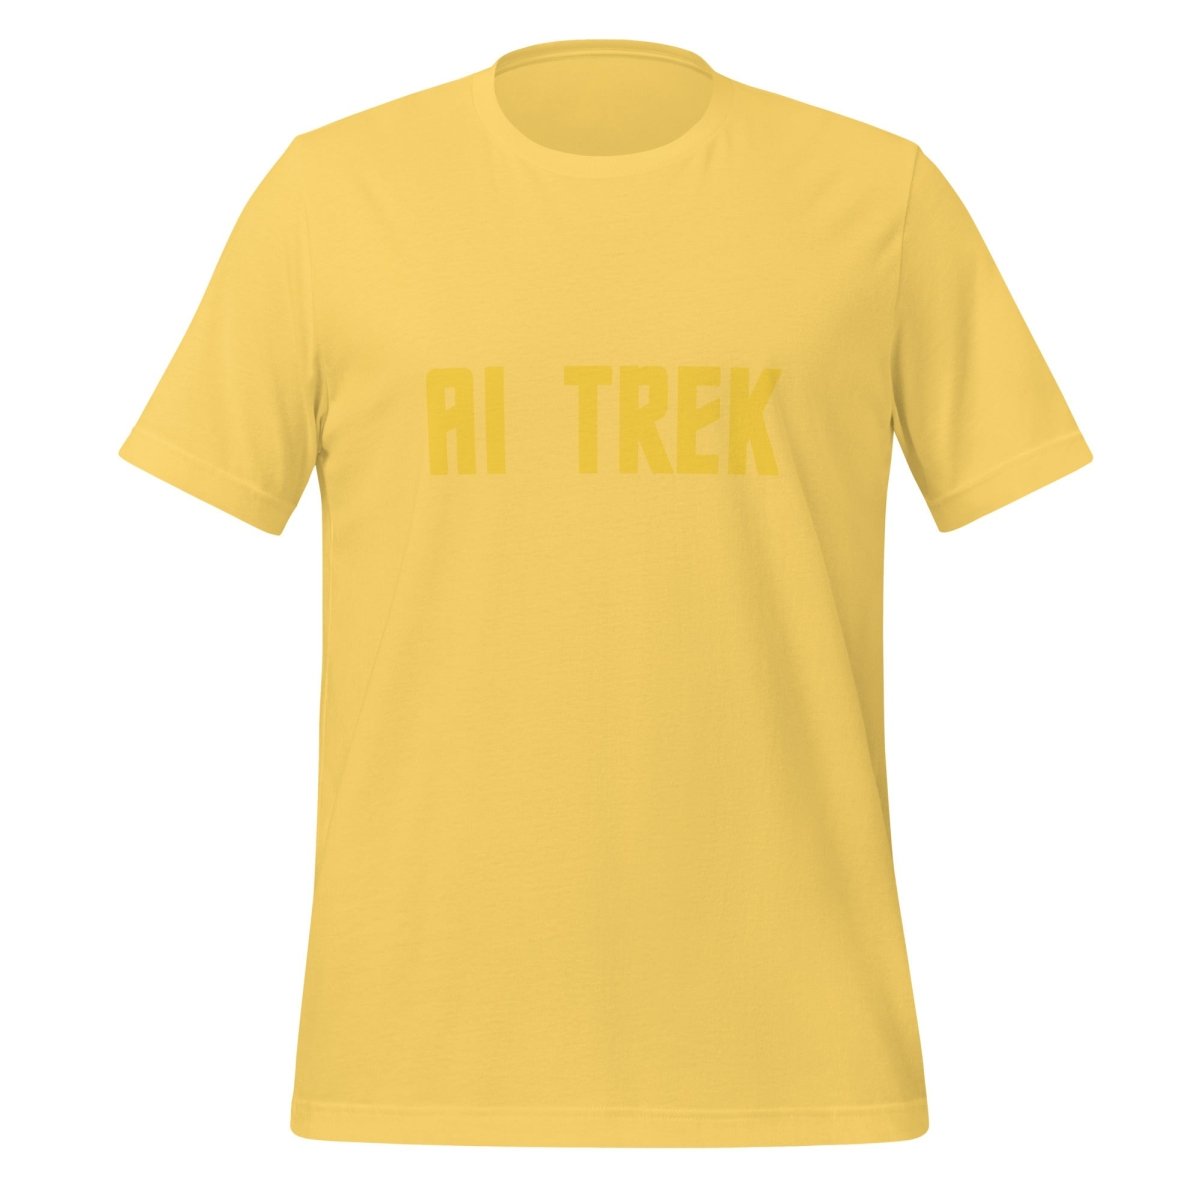 AI TREK T - Shirt (unisex) - Yellow - AI Store